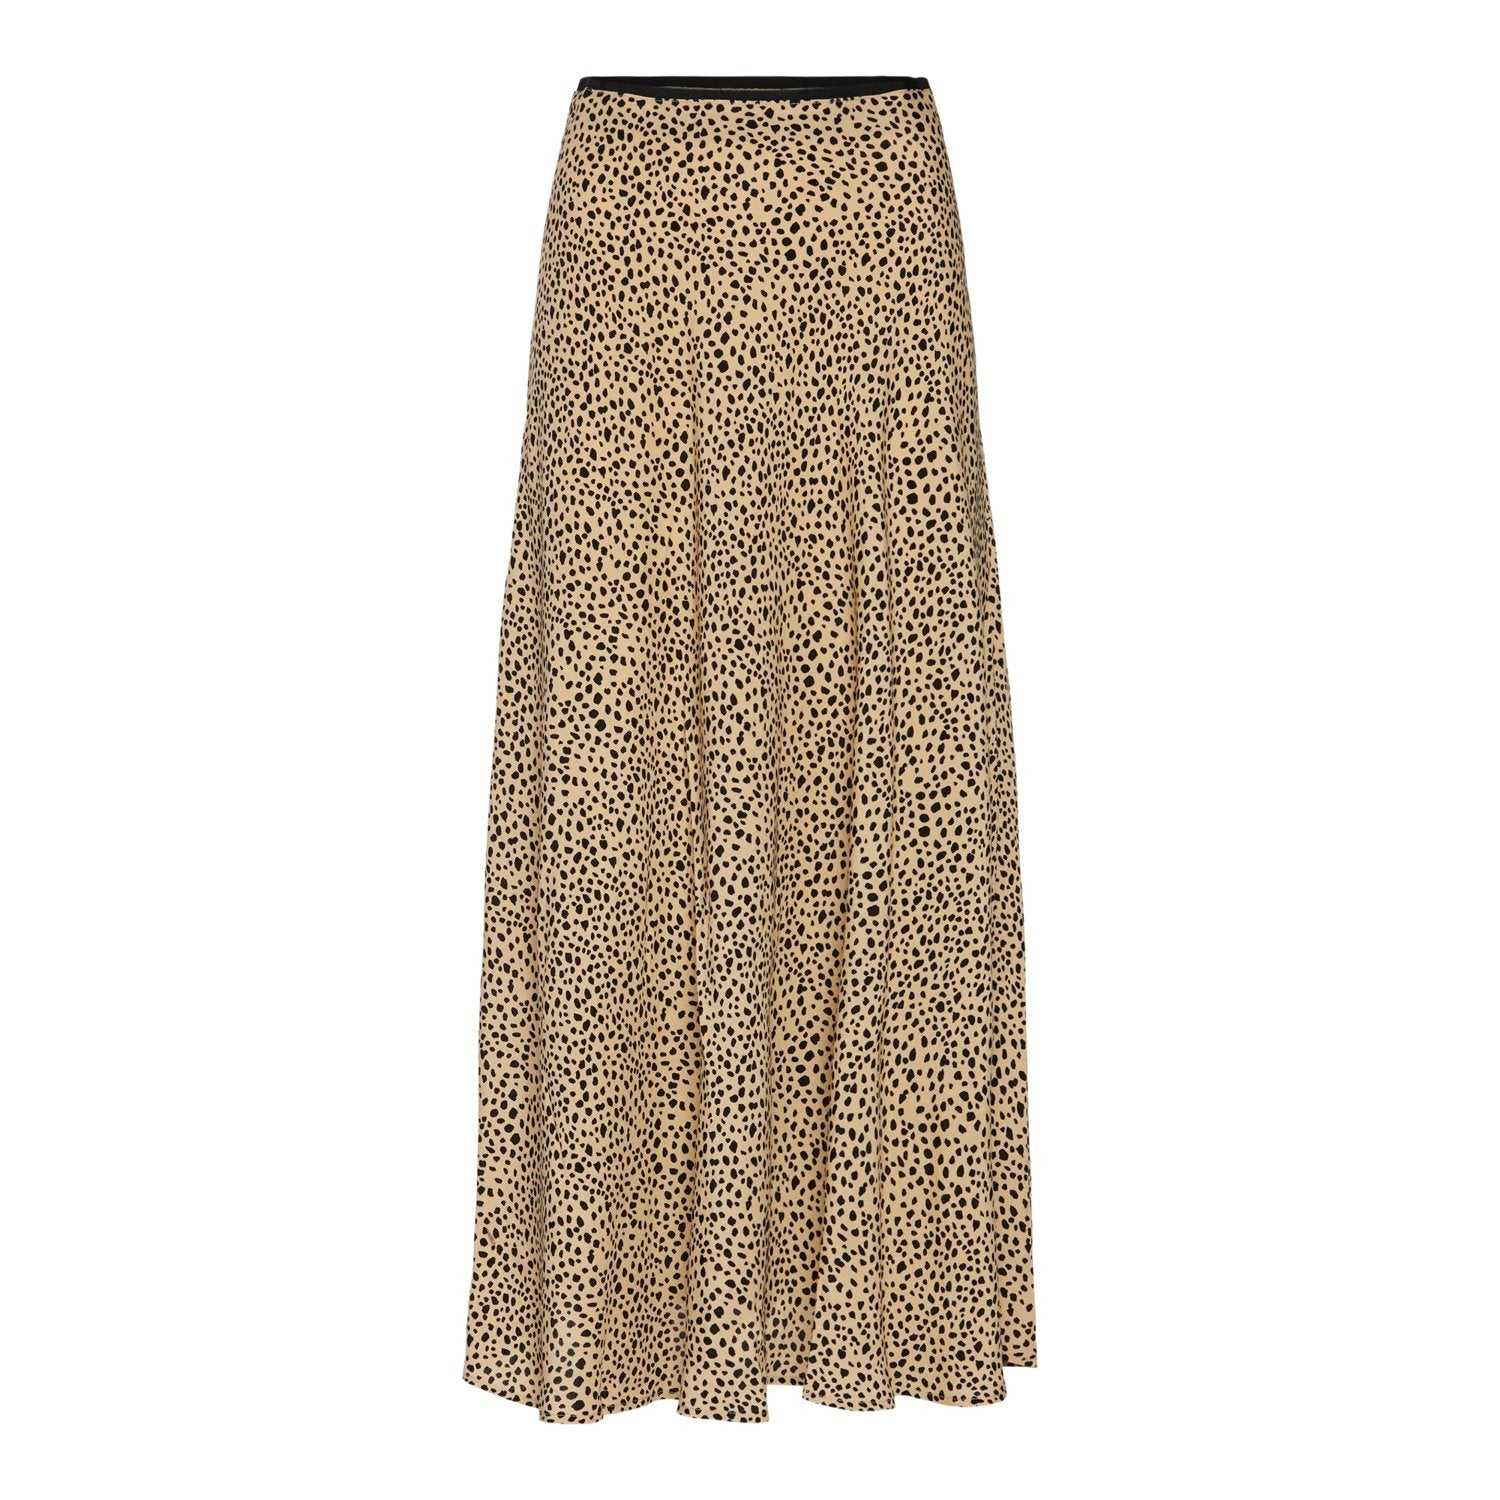 Leopard Print Woven Midi Skirt